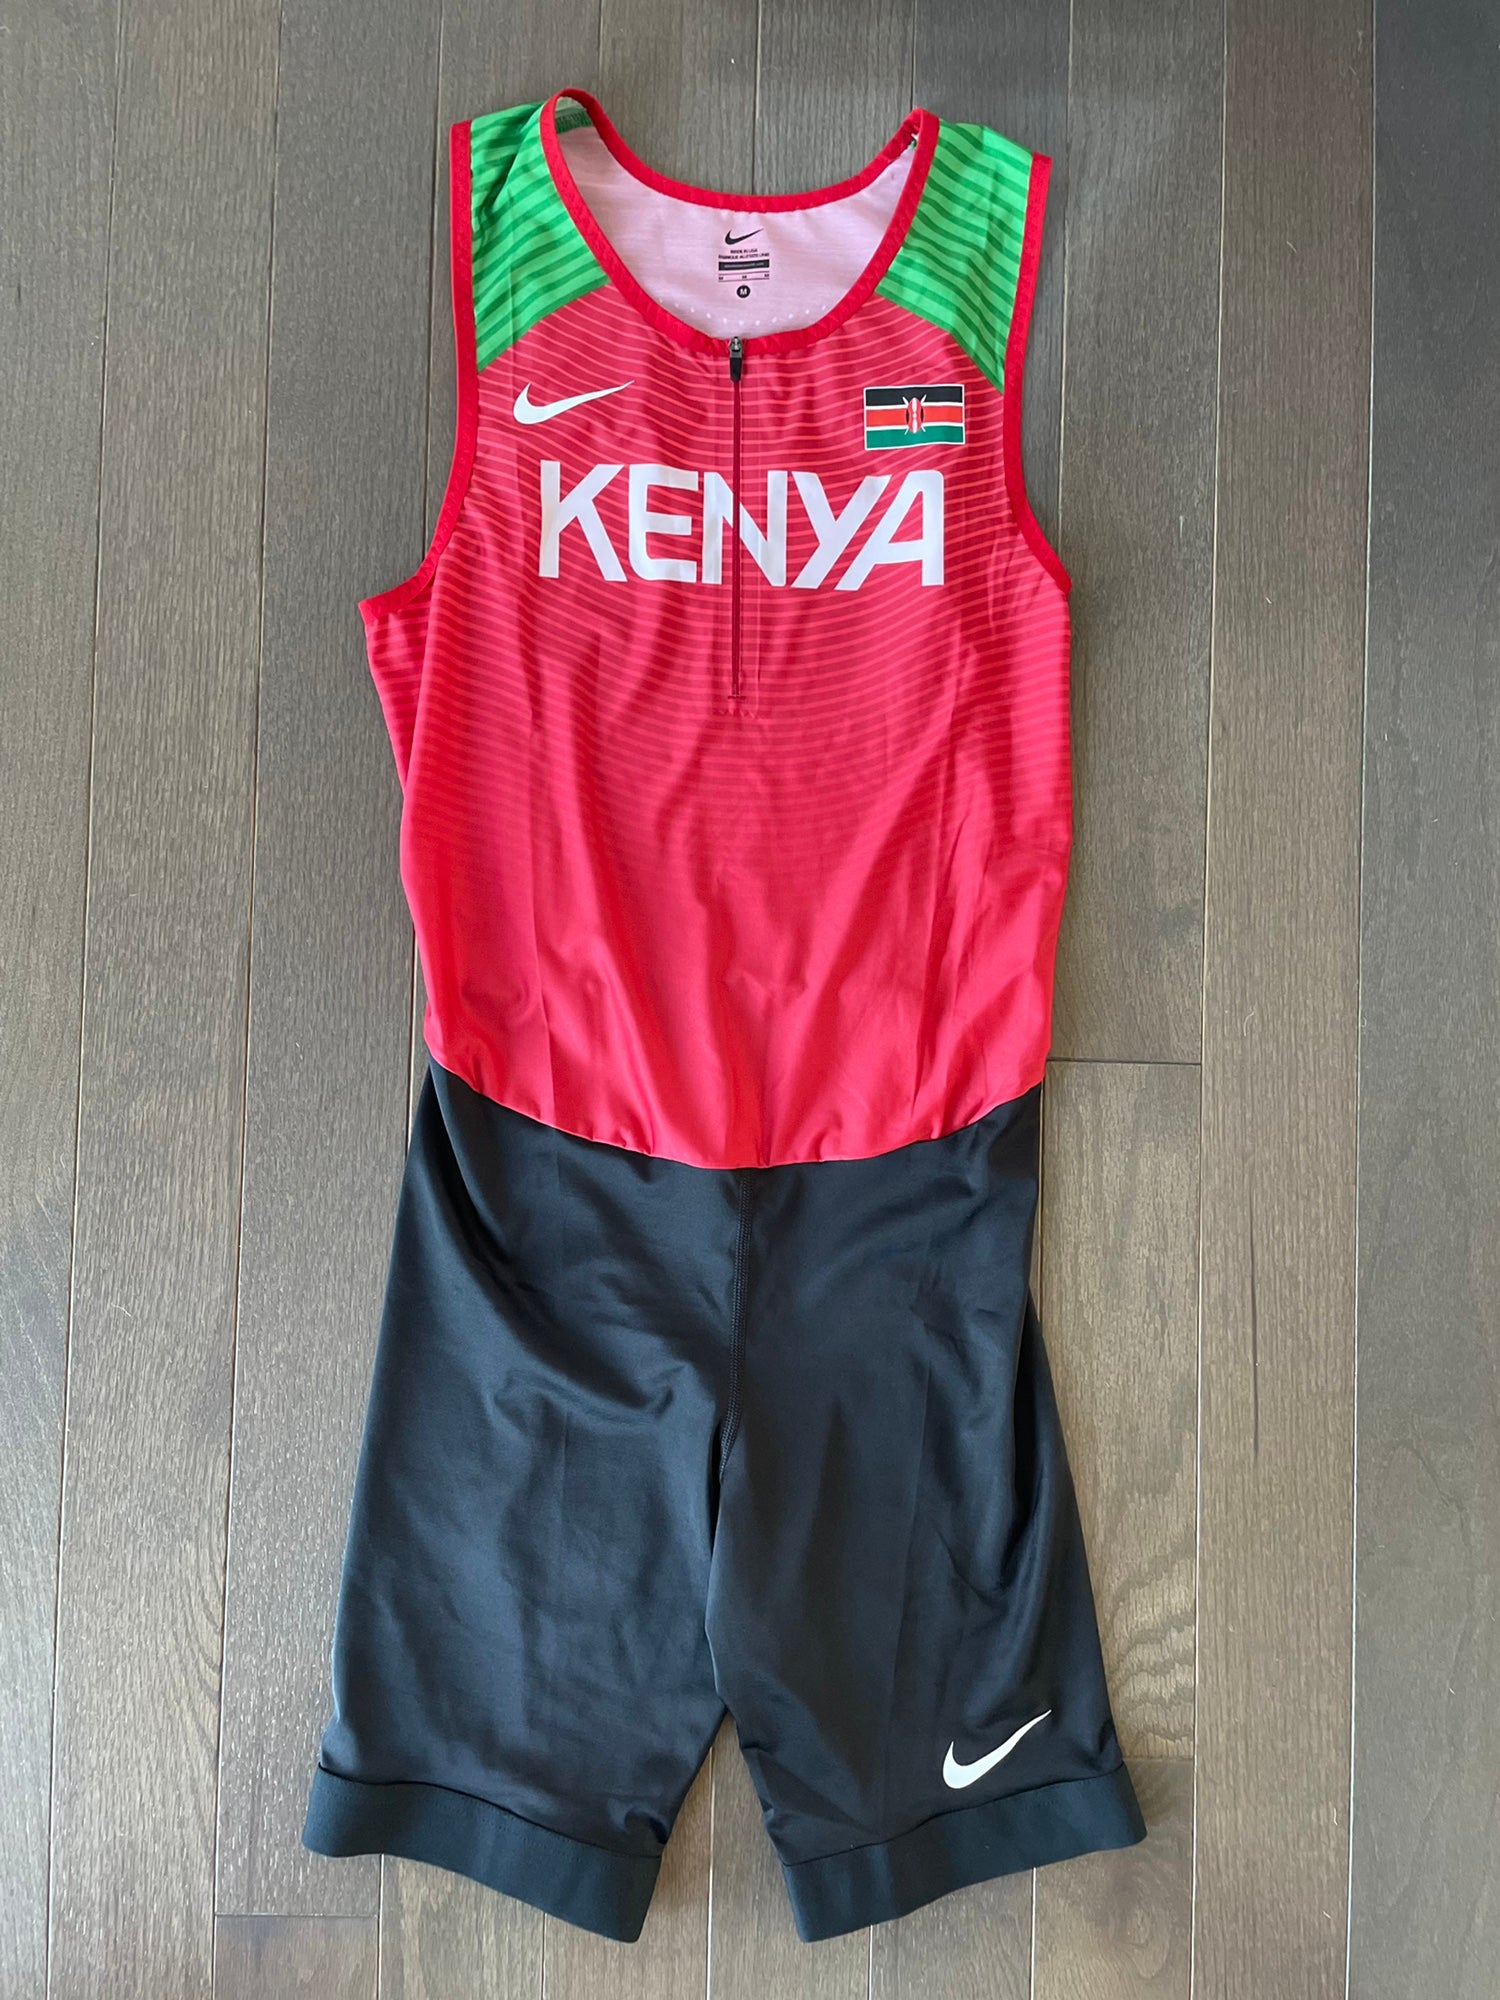 Nike Kenya Elite Pro Track and Field Speedsuit Men's Size Medium